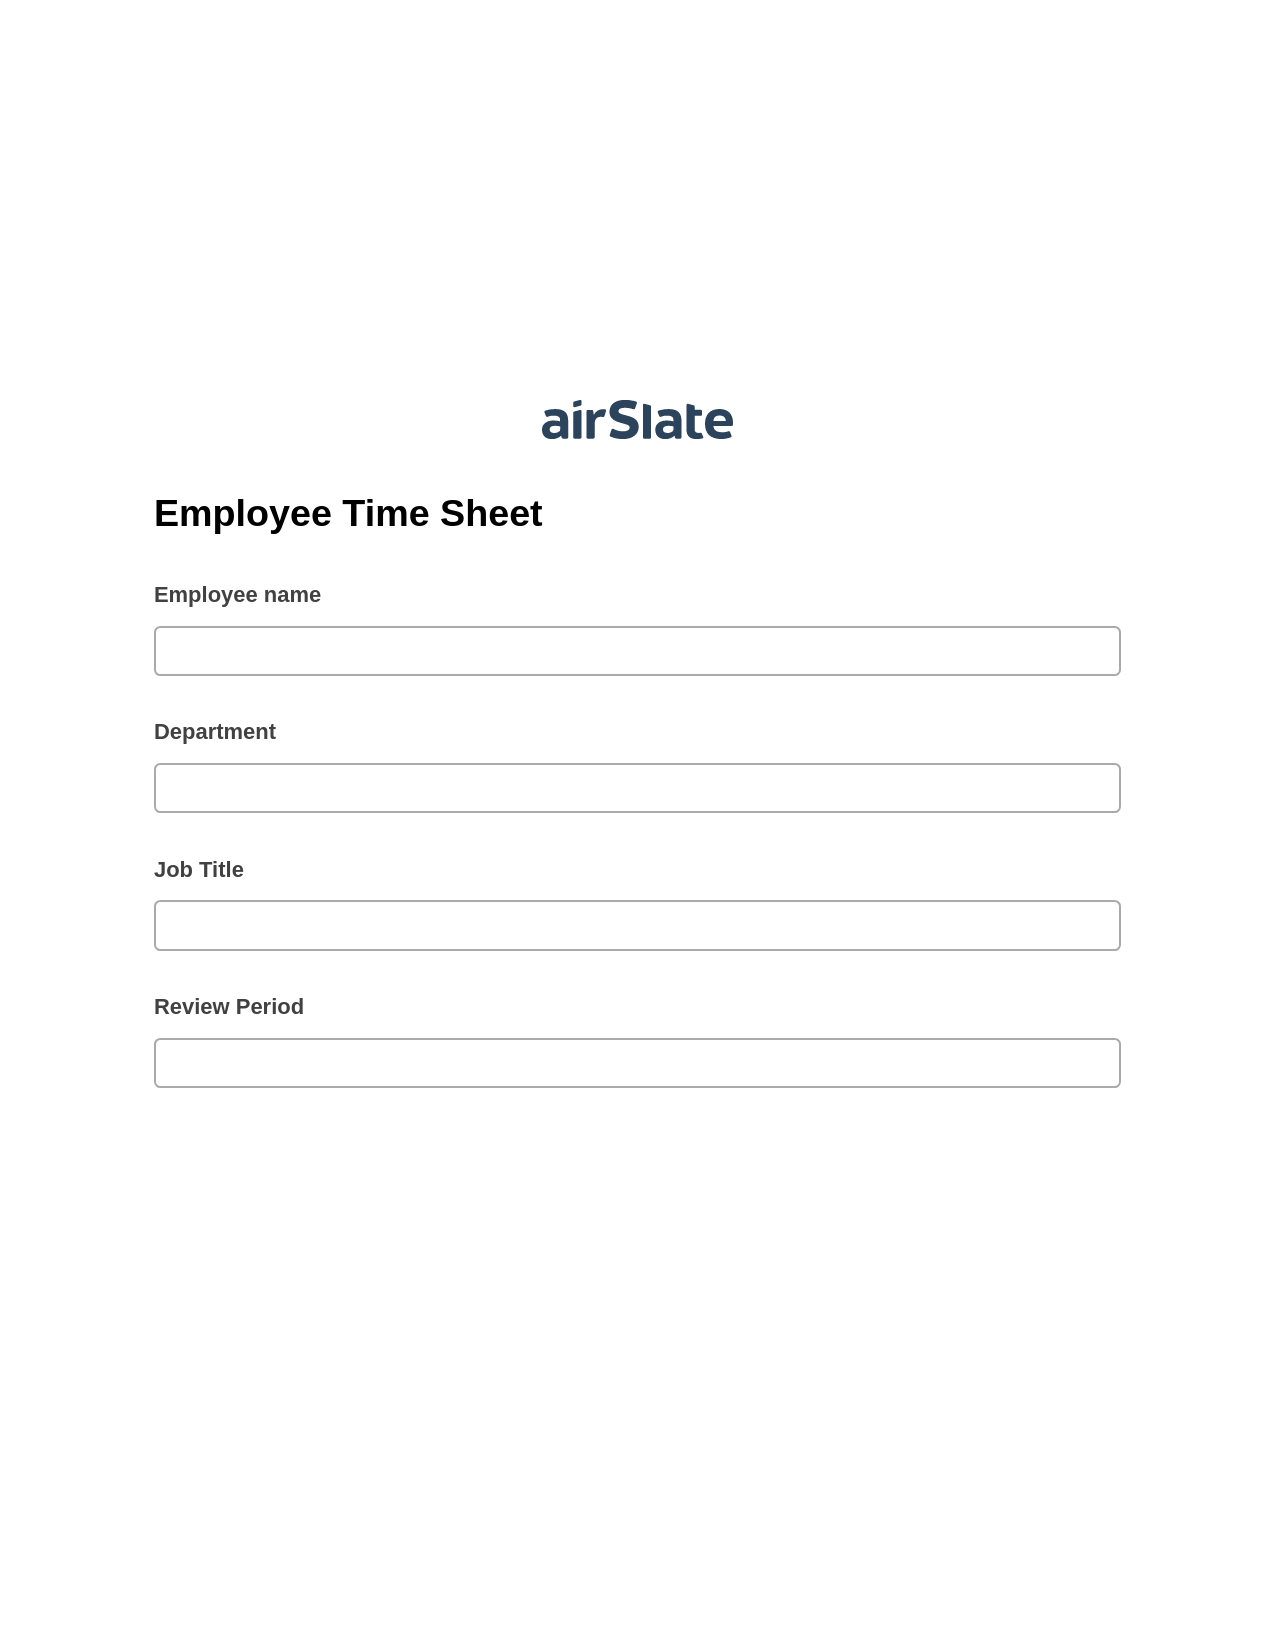 Multirole Employee Time Sheet Pre-fill Document Bot, Remove Slate Bot, Export to MySQL Bot